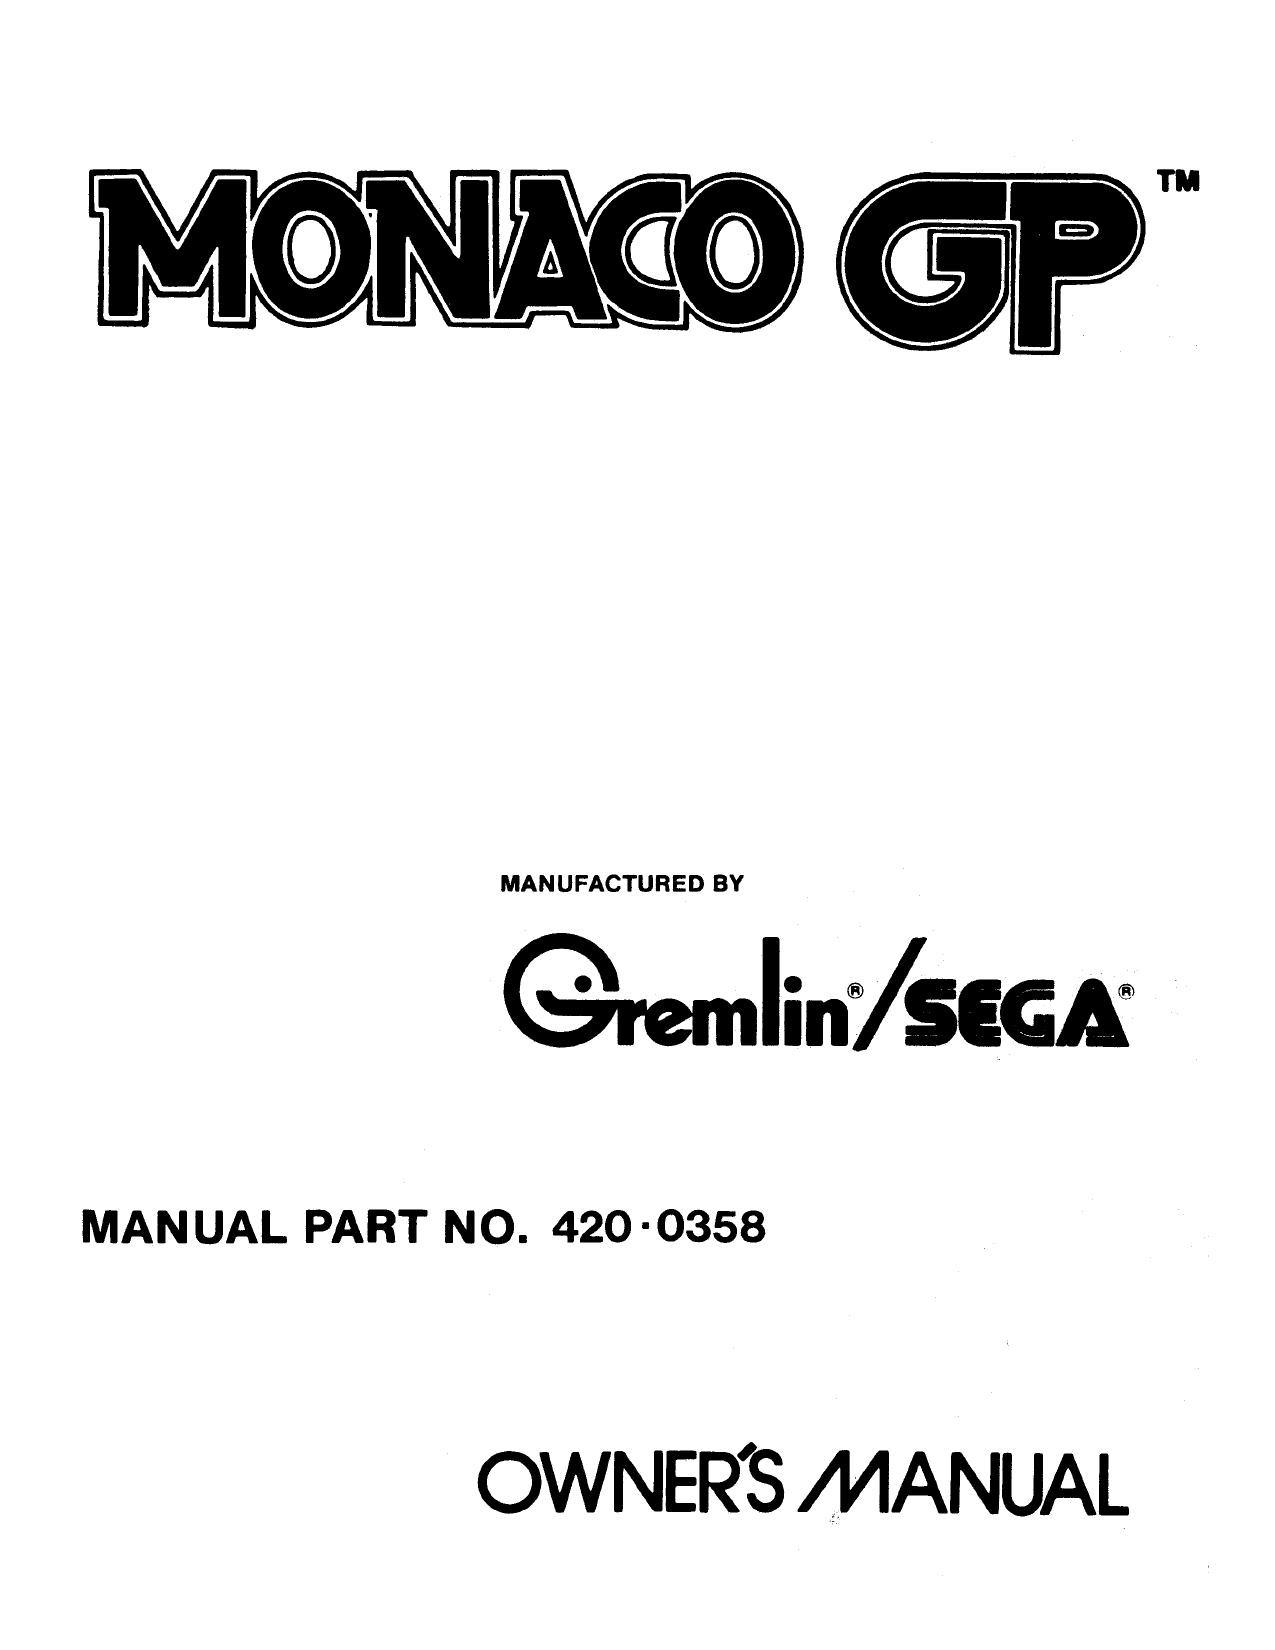 MonacoGP Manual